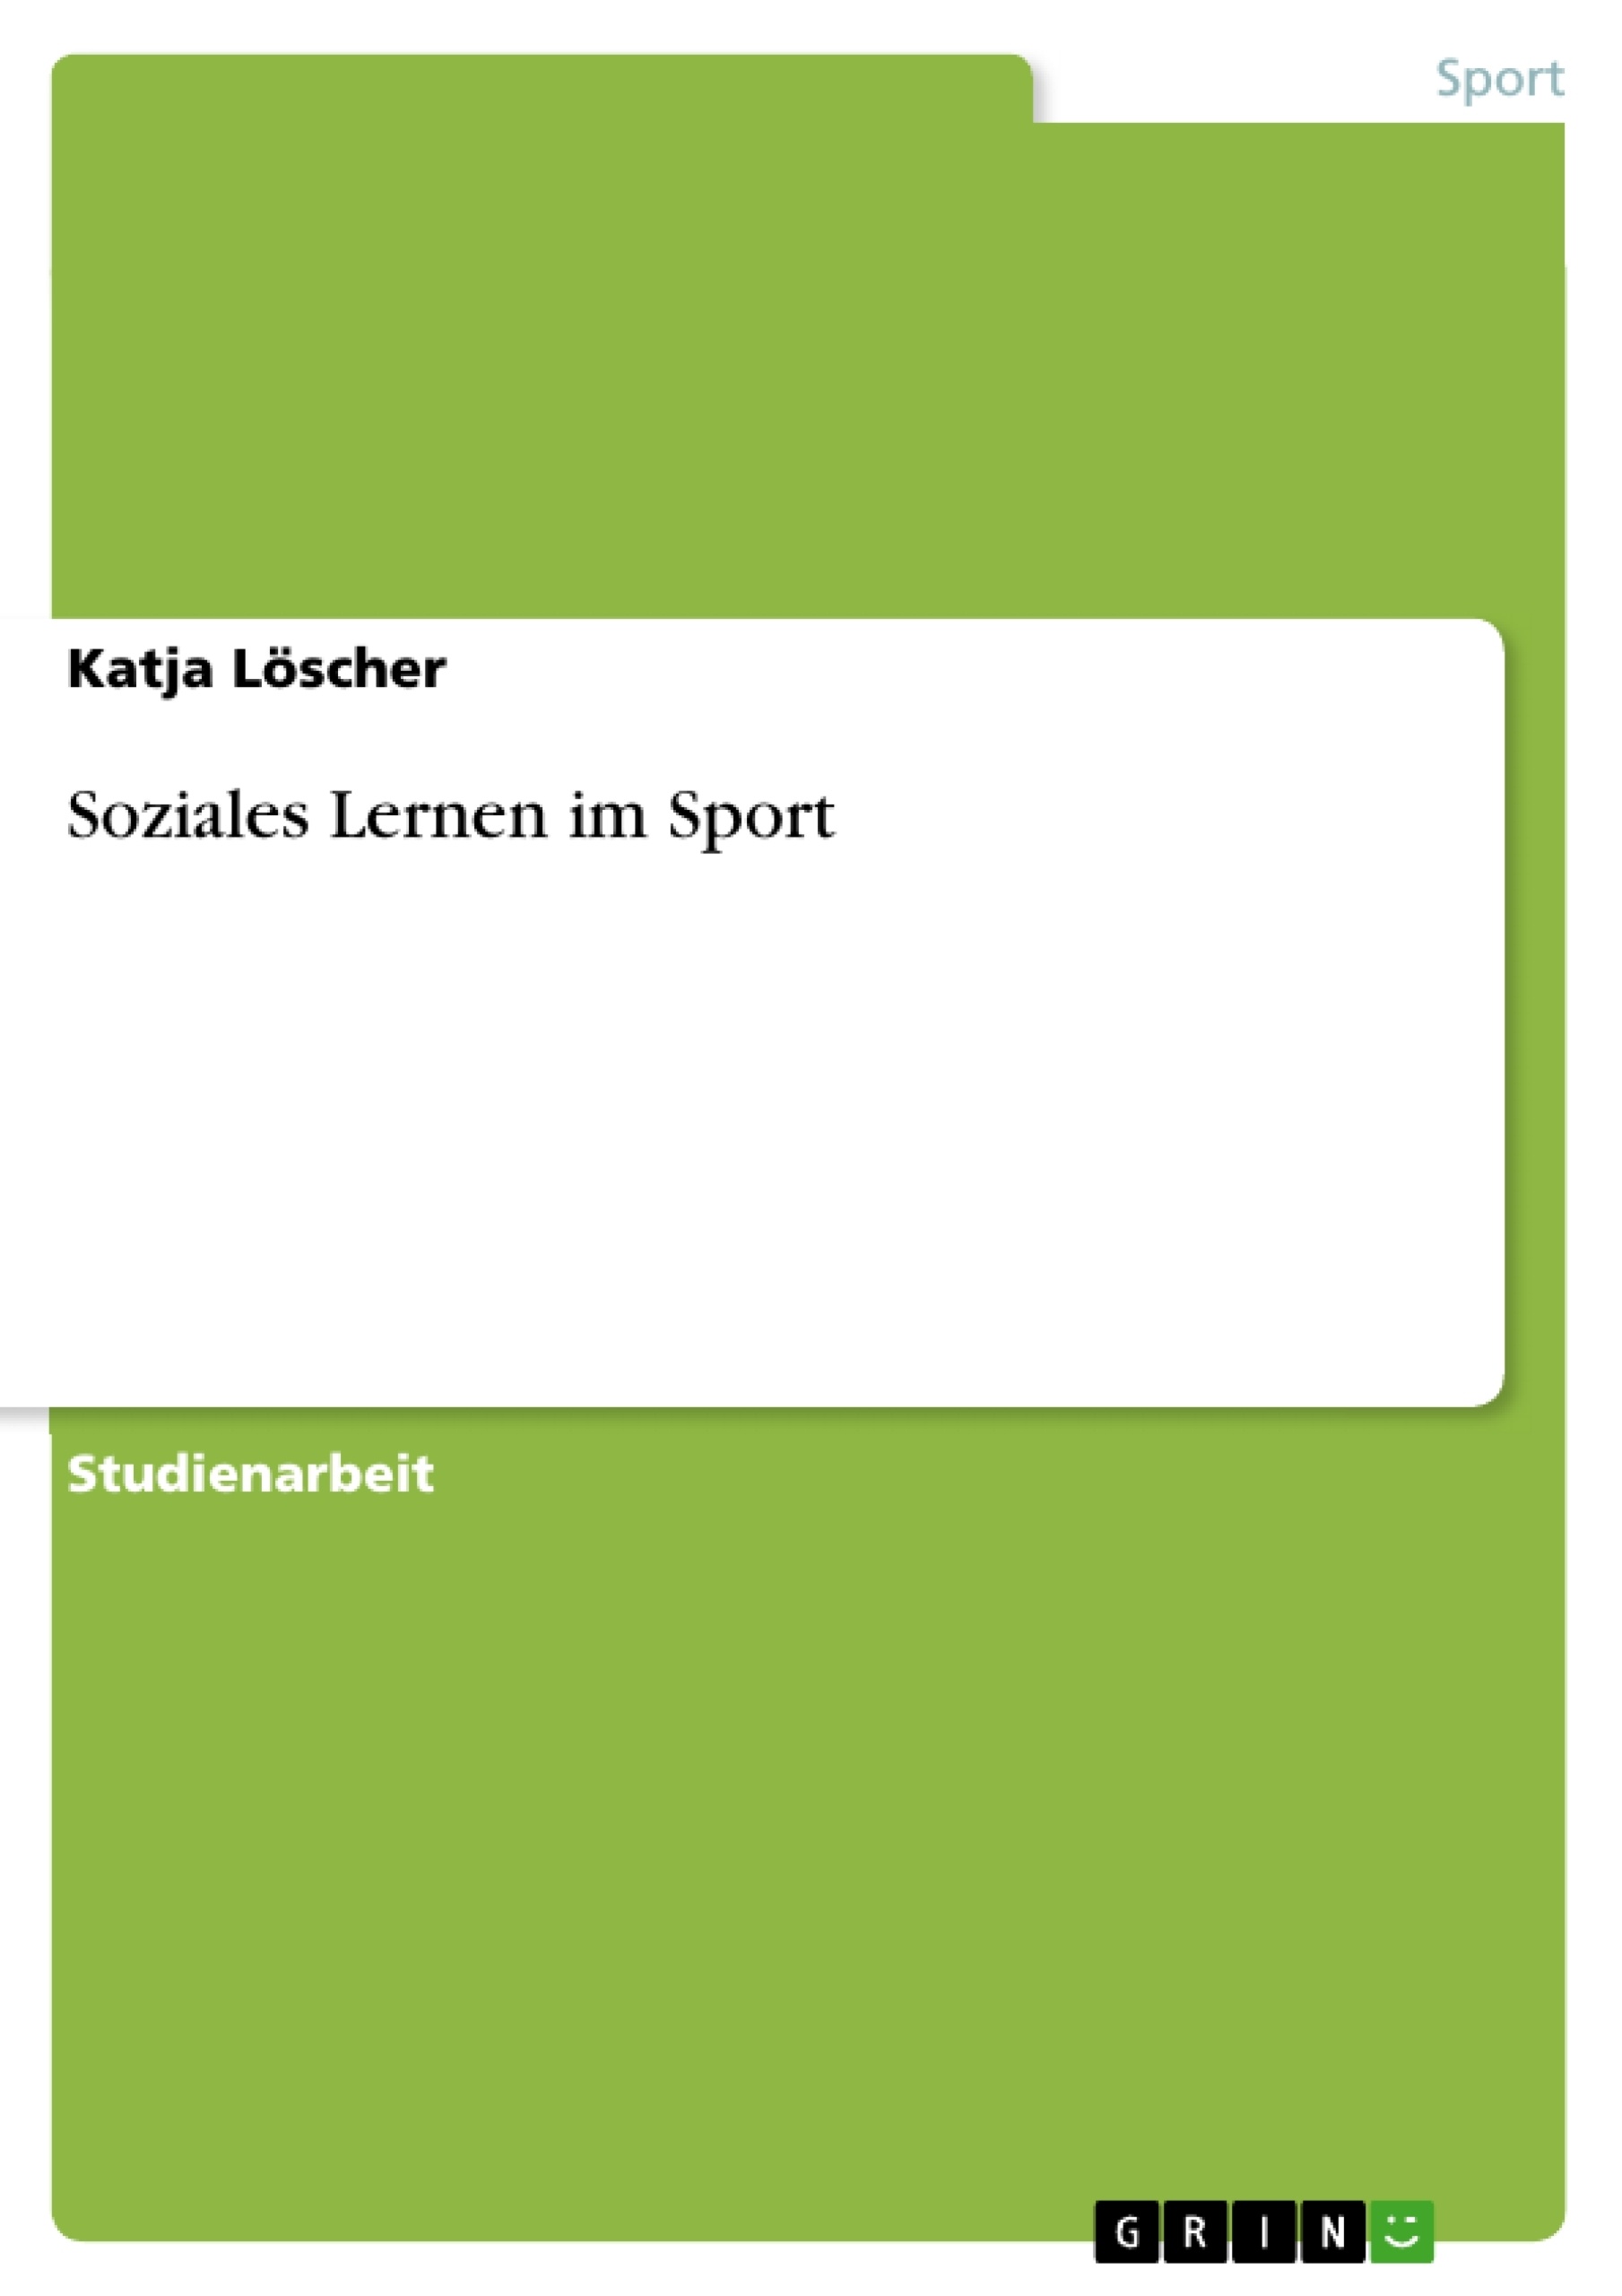 Titre: Soziales Lernen im Sport